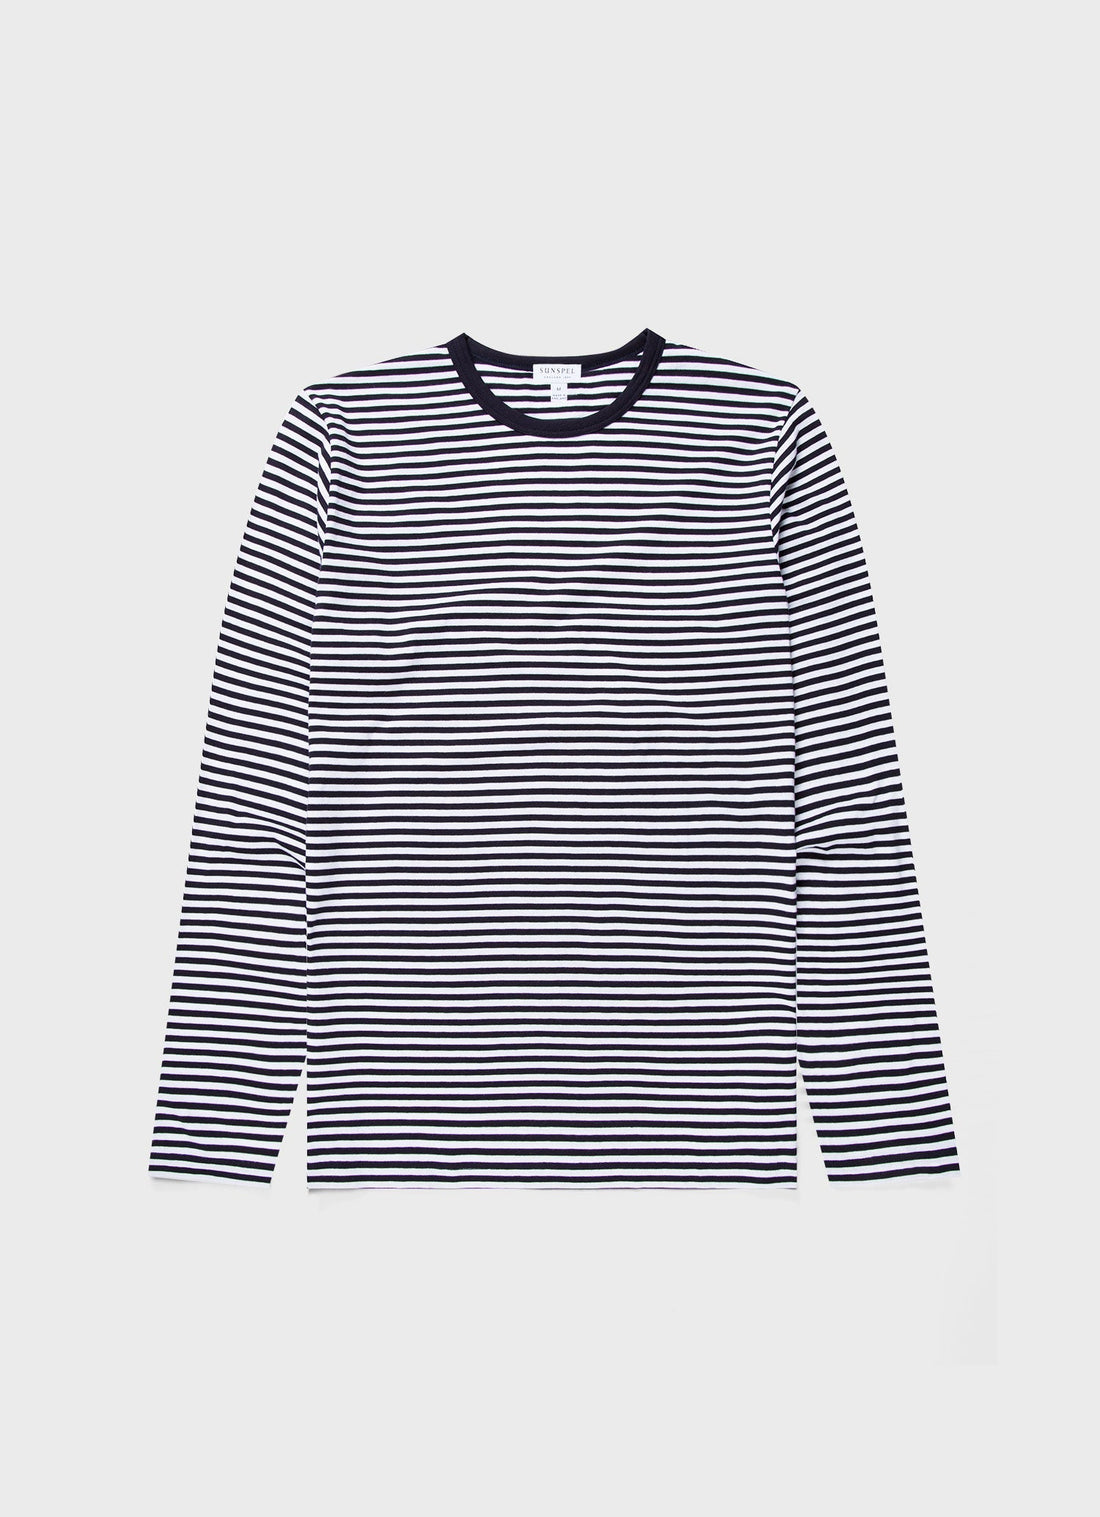 Men's Classic Long Sleeve T-shirt in Navy/White English Stripe